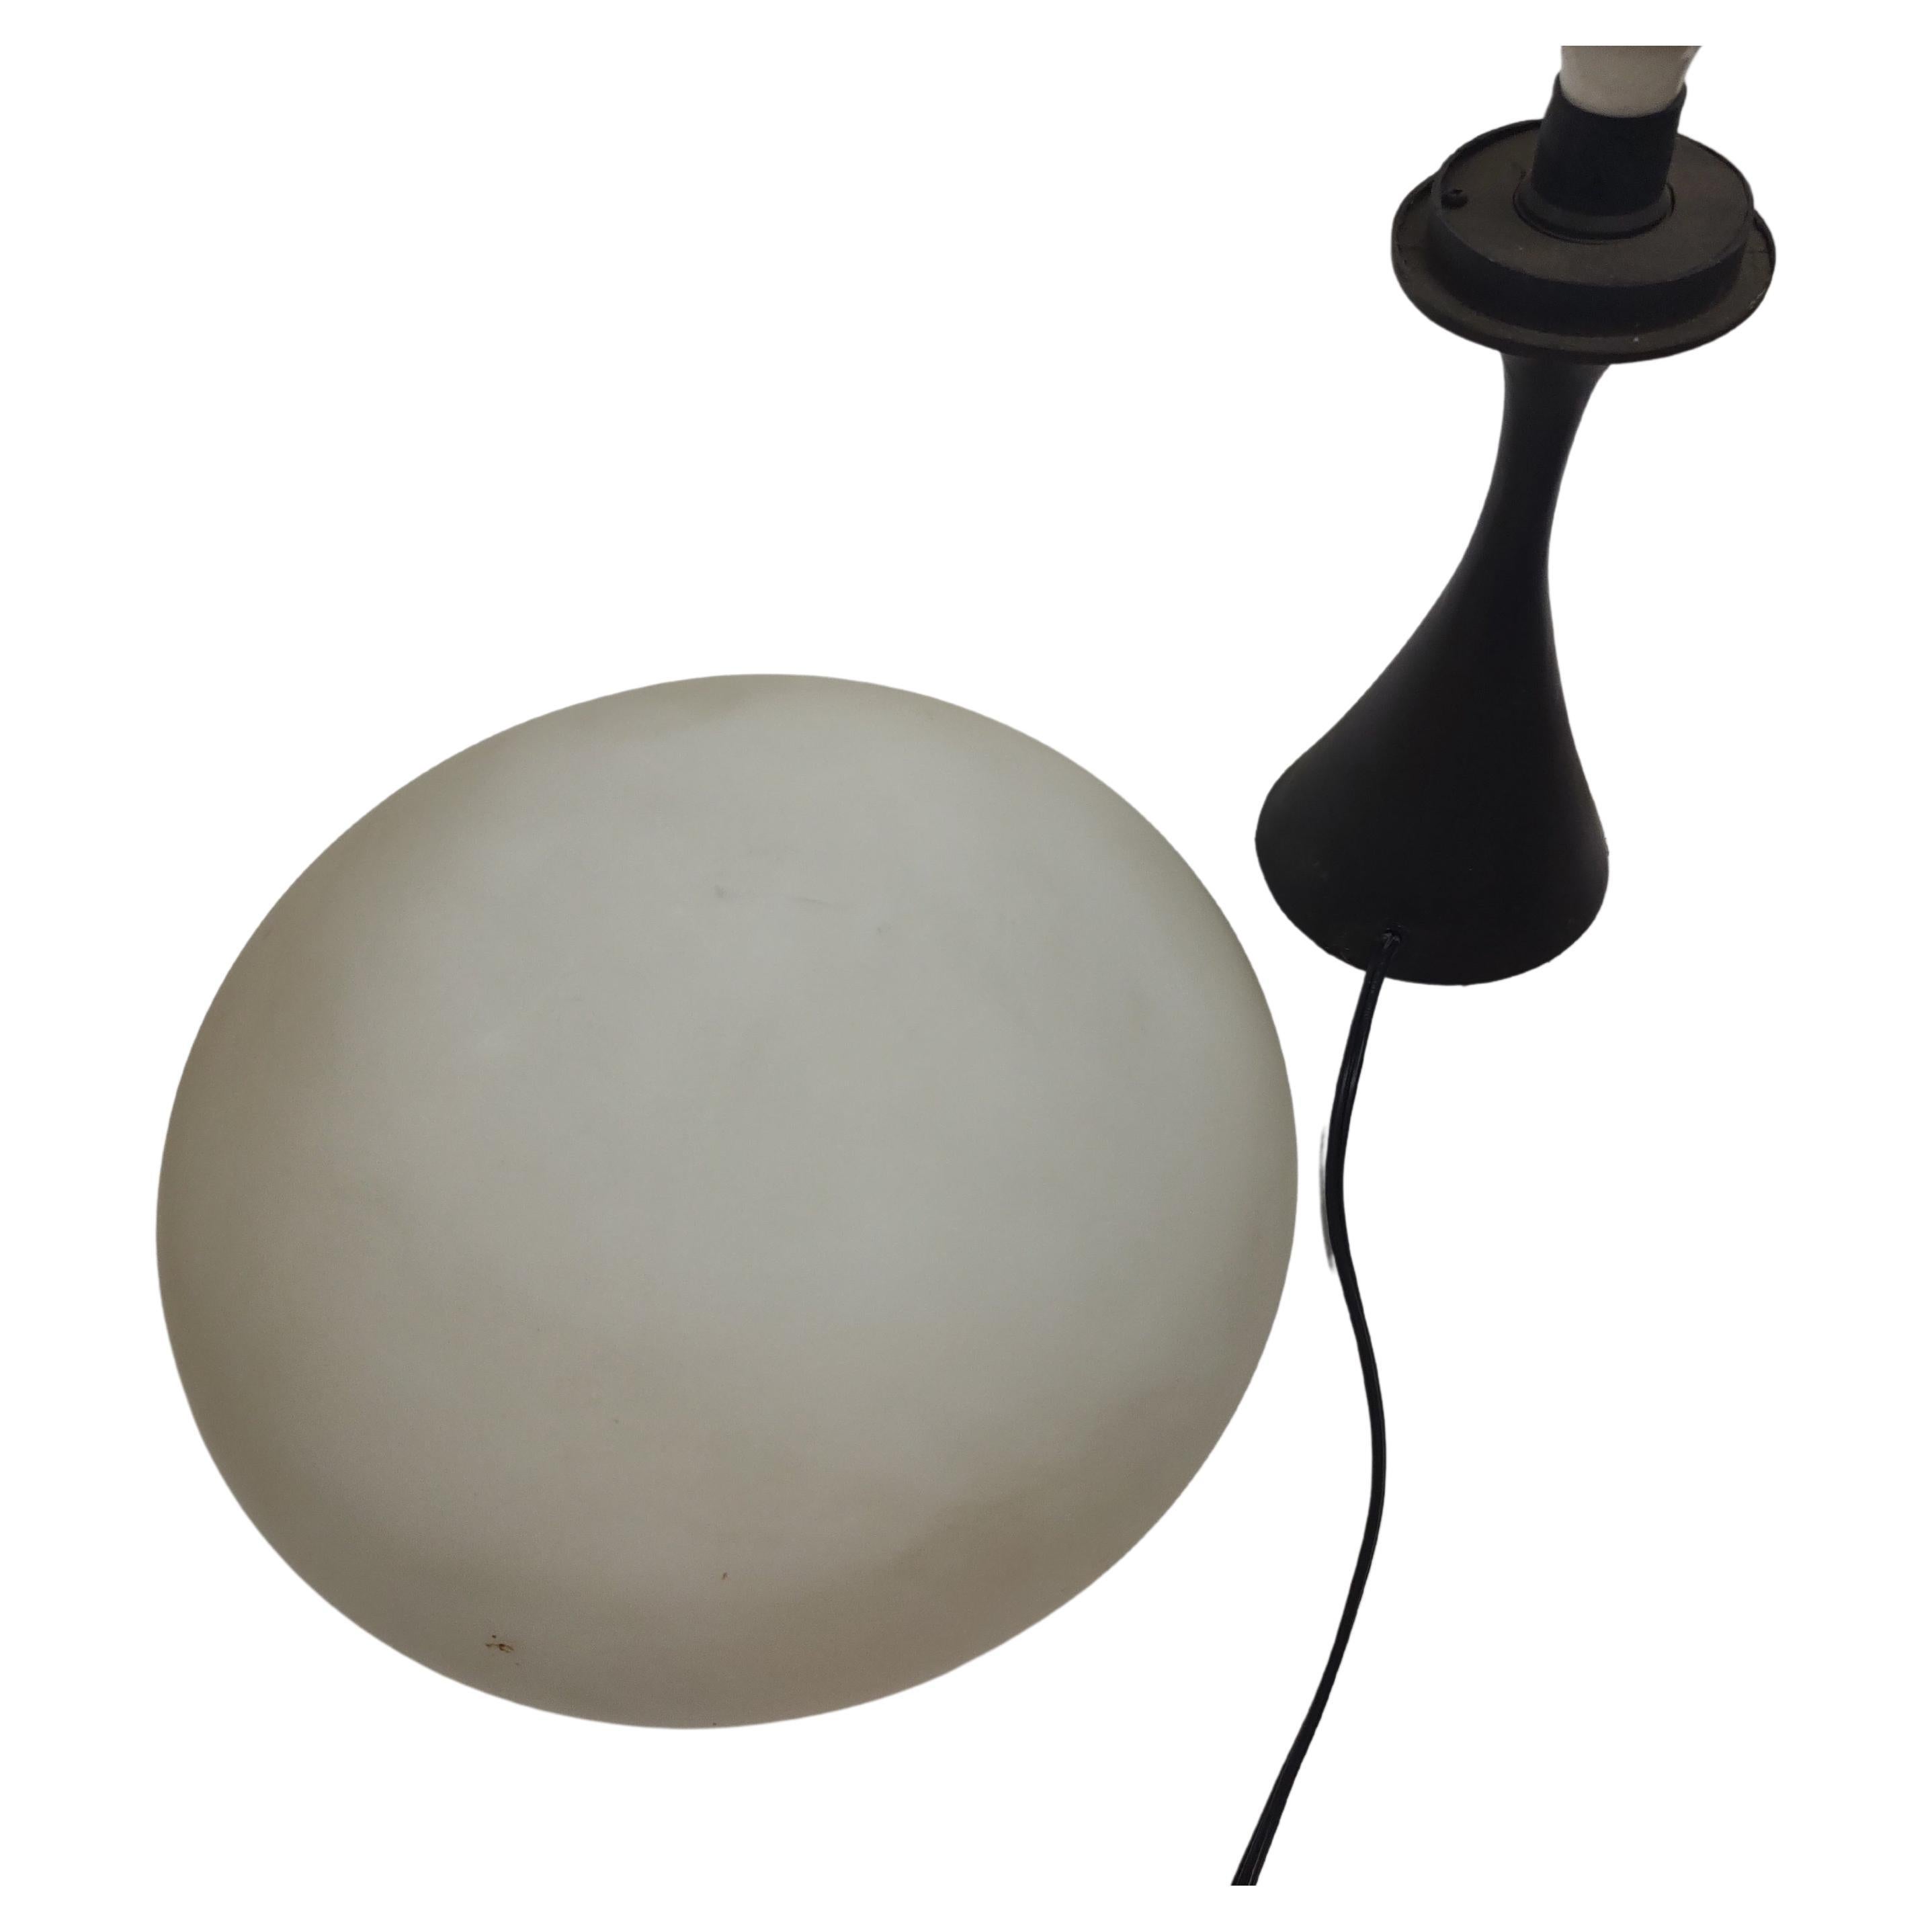 American Mid Century Modern Sculptural Mushroom Table Lamp Attributed to Laurel Lamp Co.